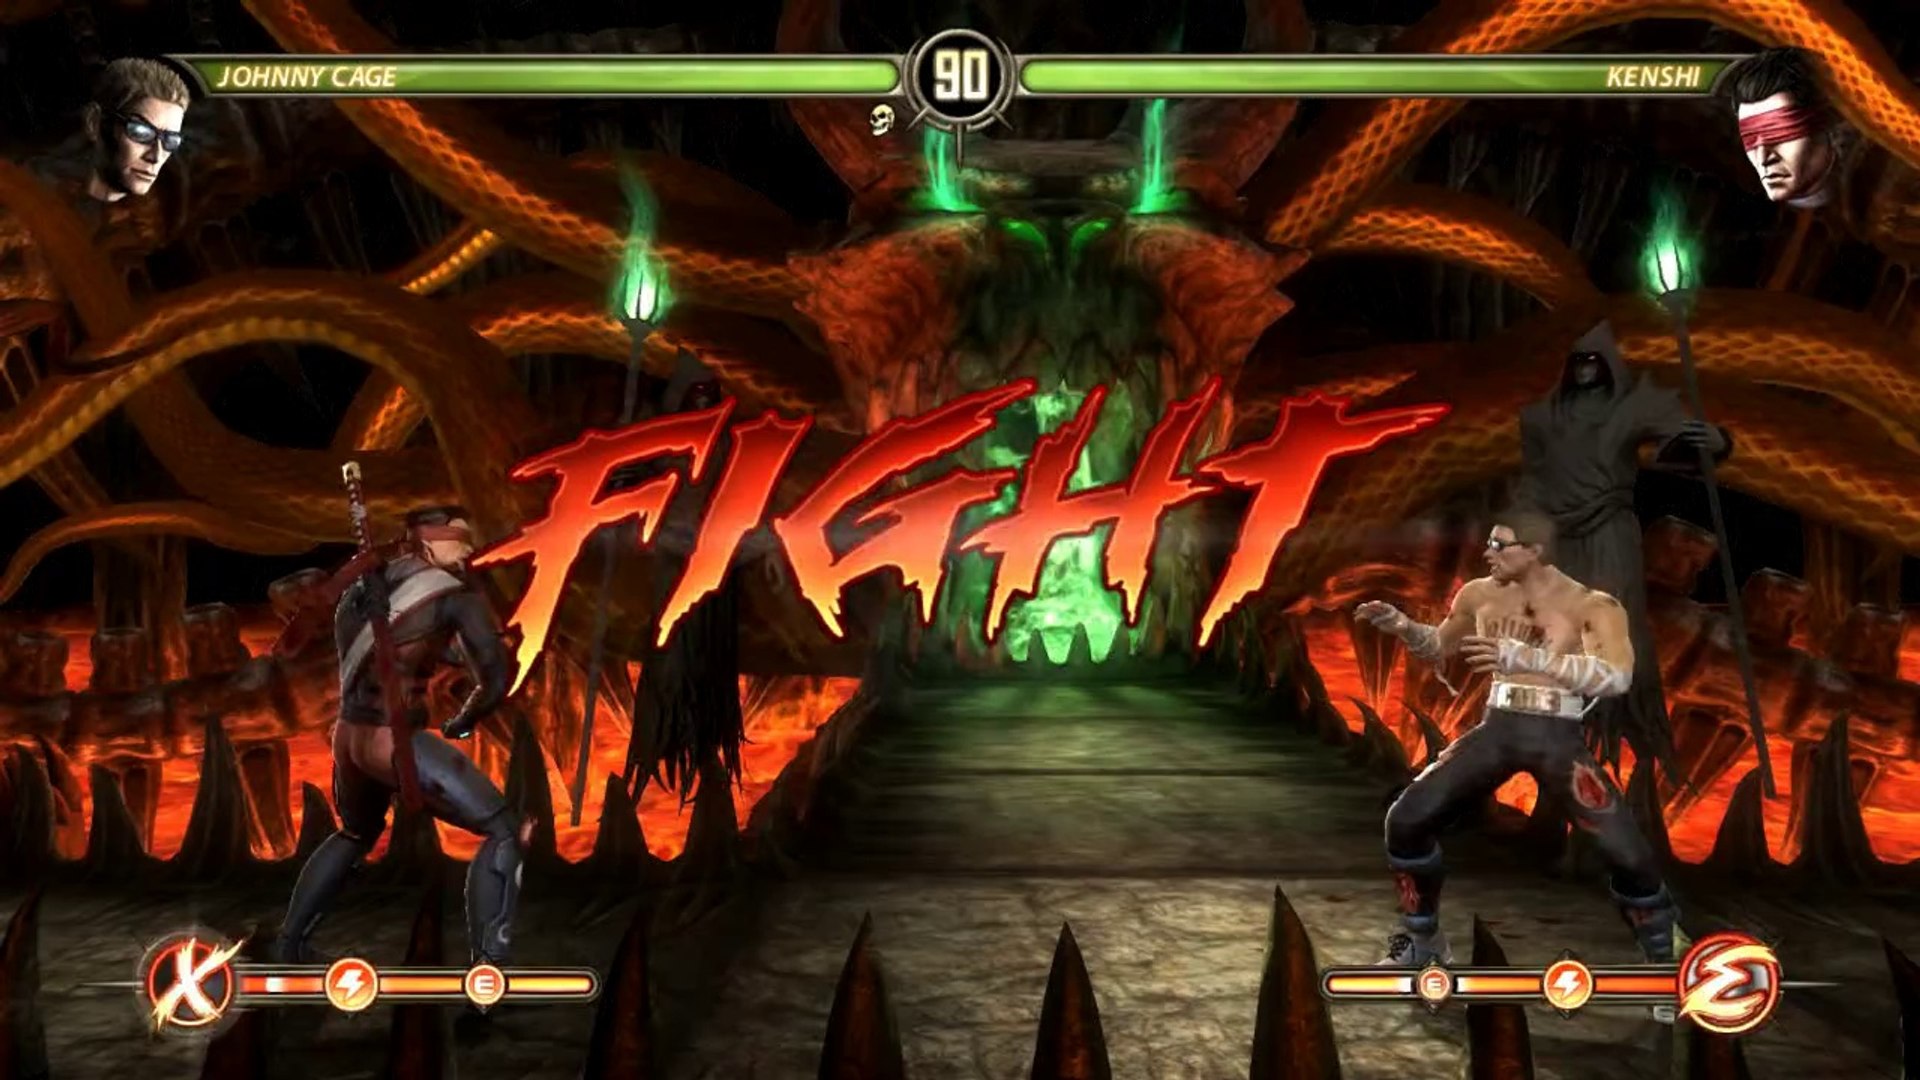 Mortal Kombat Komplete Edition. Johnny Cage vs Kenshi